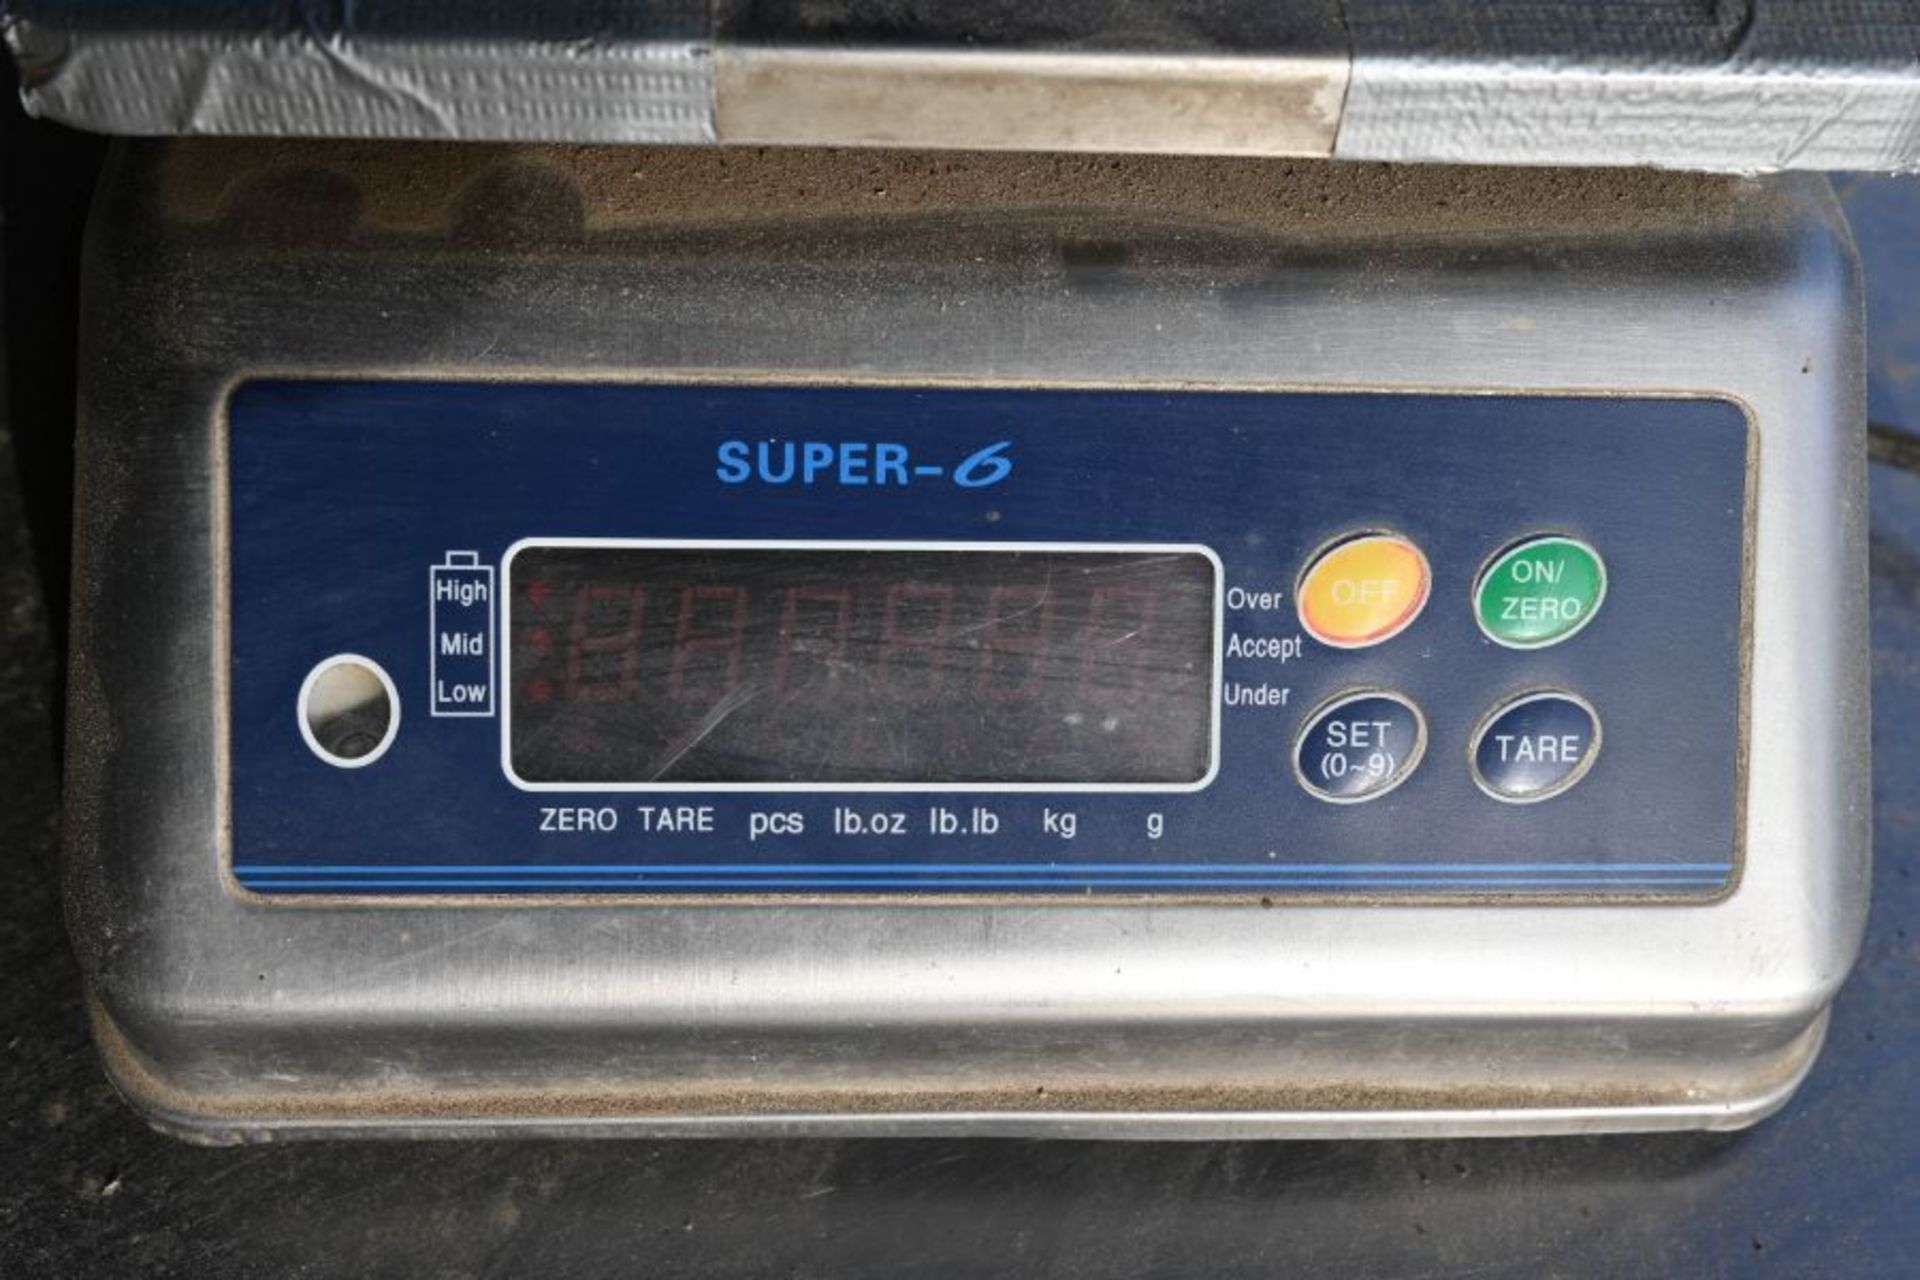 Super 6 Yantai Junjie weighing apparatus - Image 4 of 4